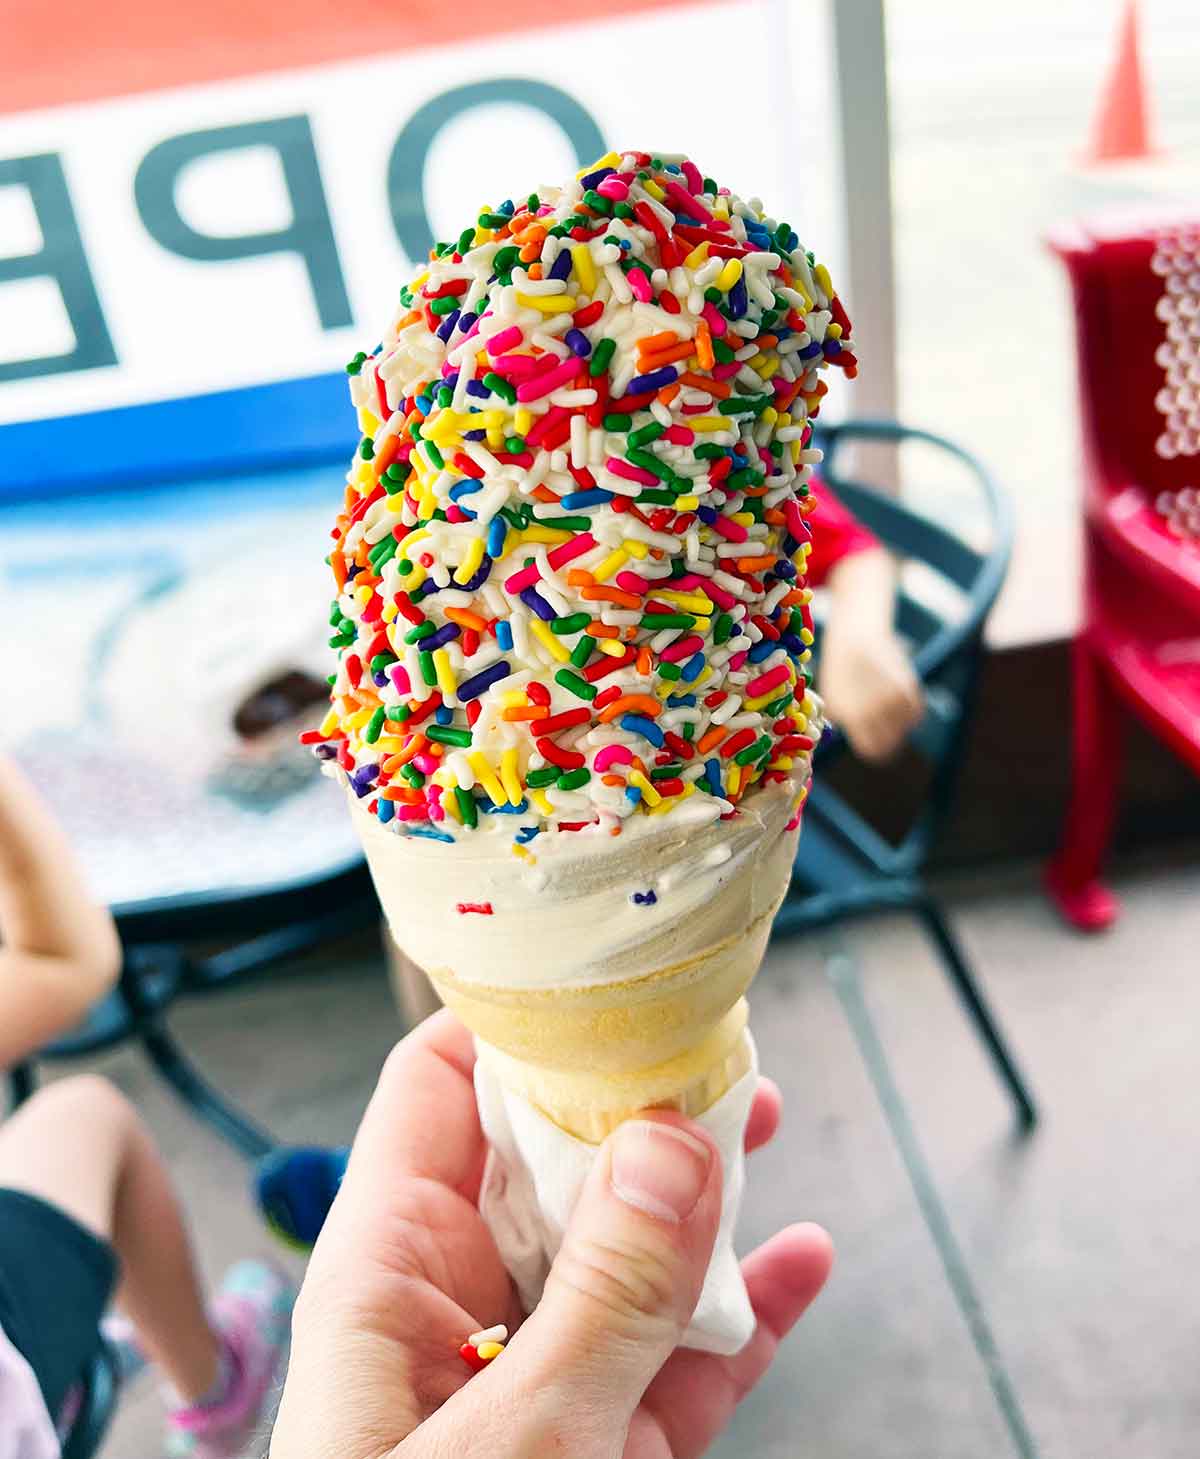 Soft serve ice cream cone with rainbow sprinkles.